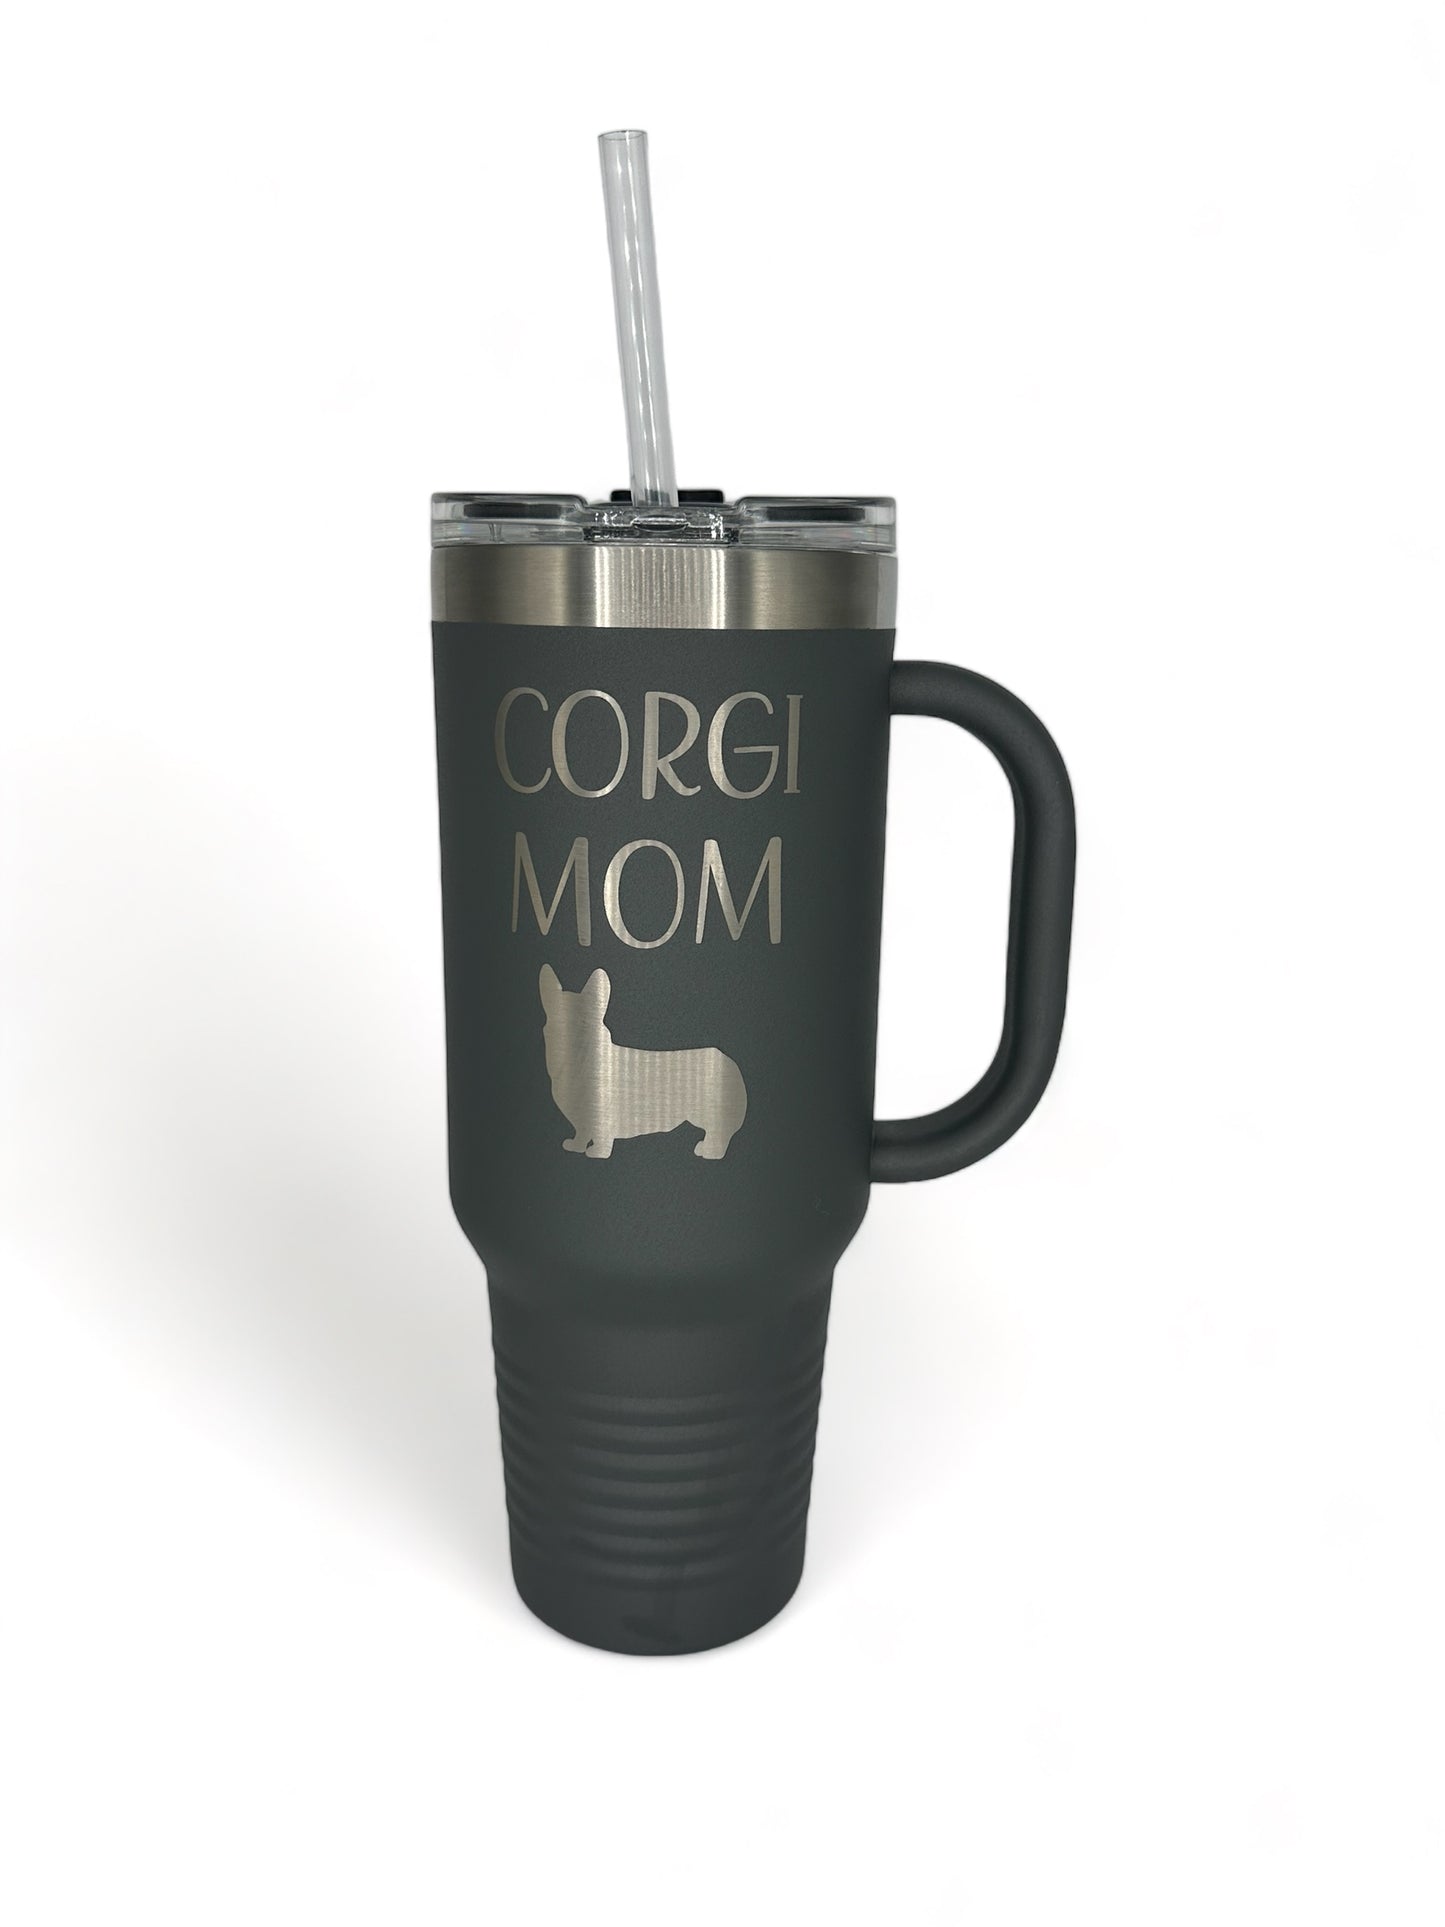 40 oz Corgi Mom Travel Mug